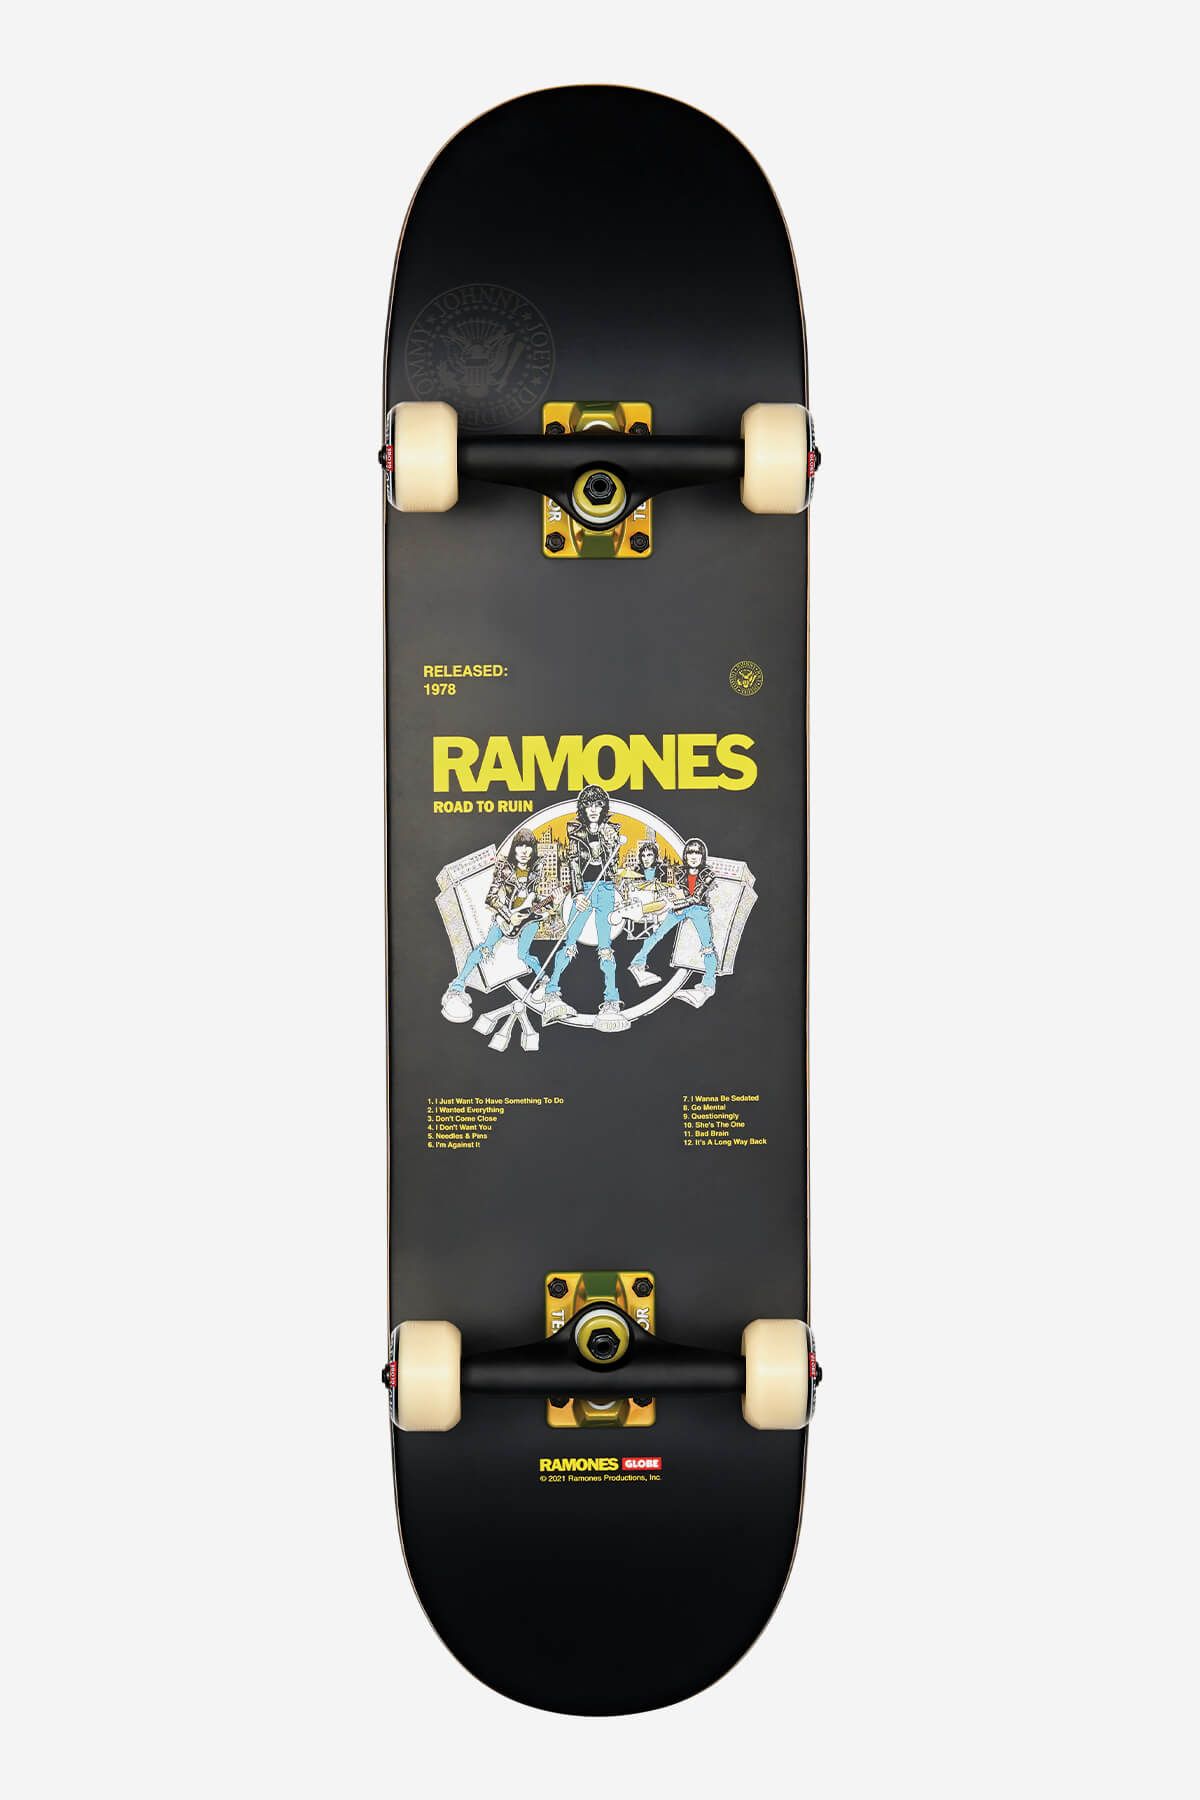 Globe Complete Skateboard G2 Ramones - 8.25" Complete Skateboard in ROAD TO RUN